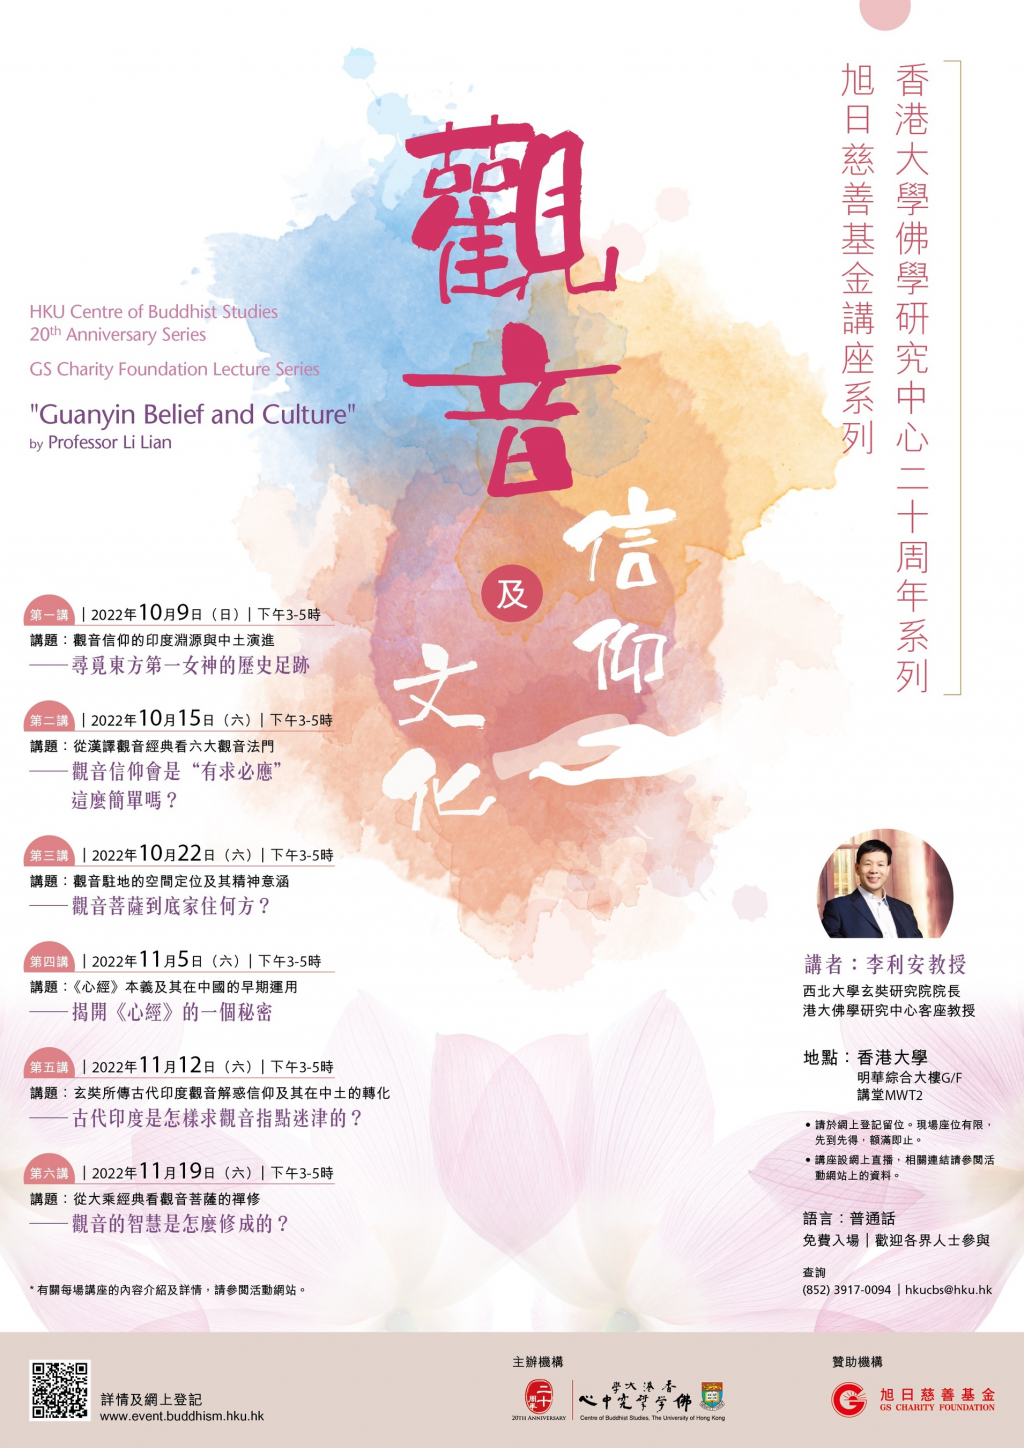 HKU Centre of Buddhist Studies 20th Anniversary Series